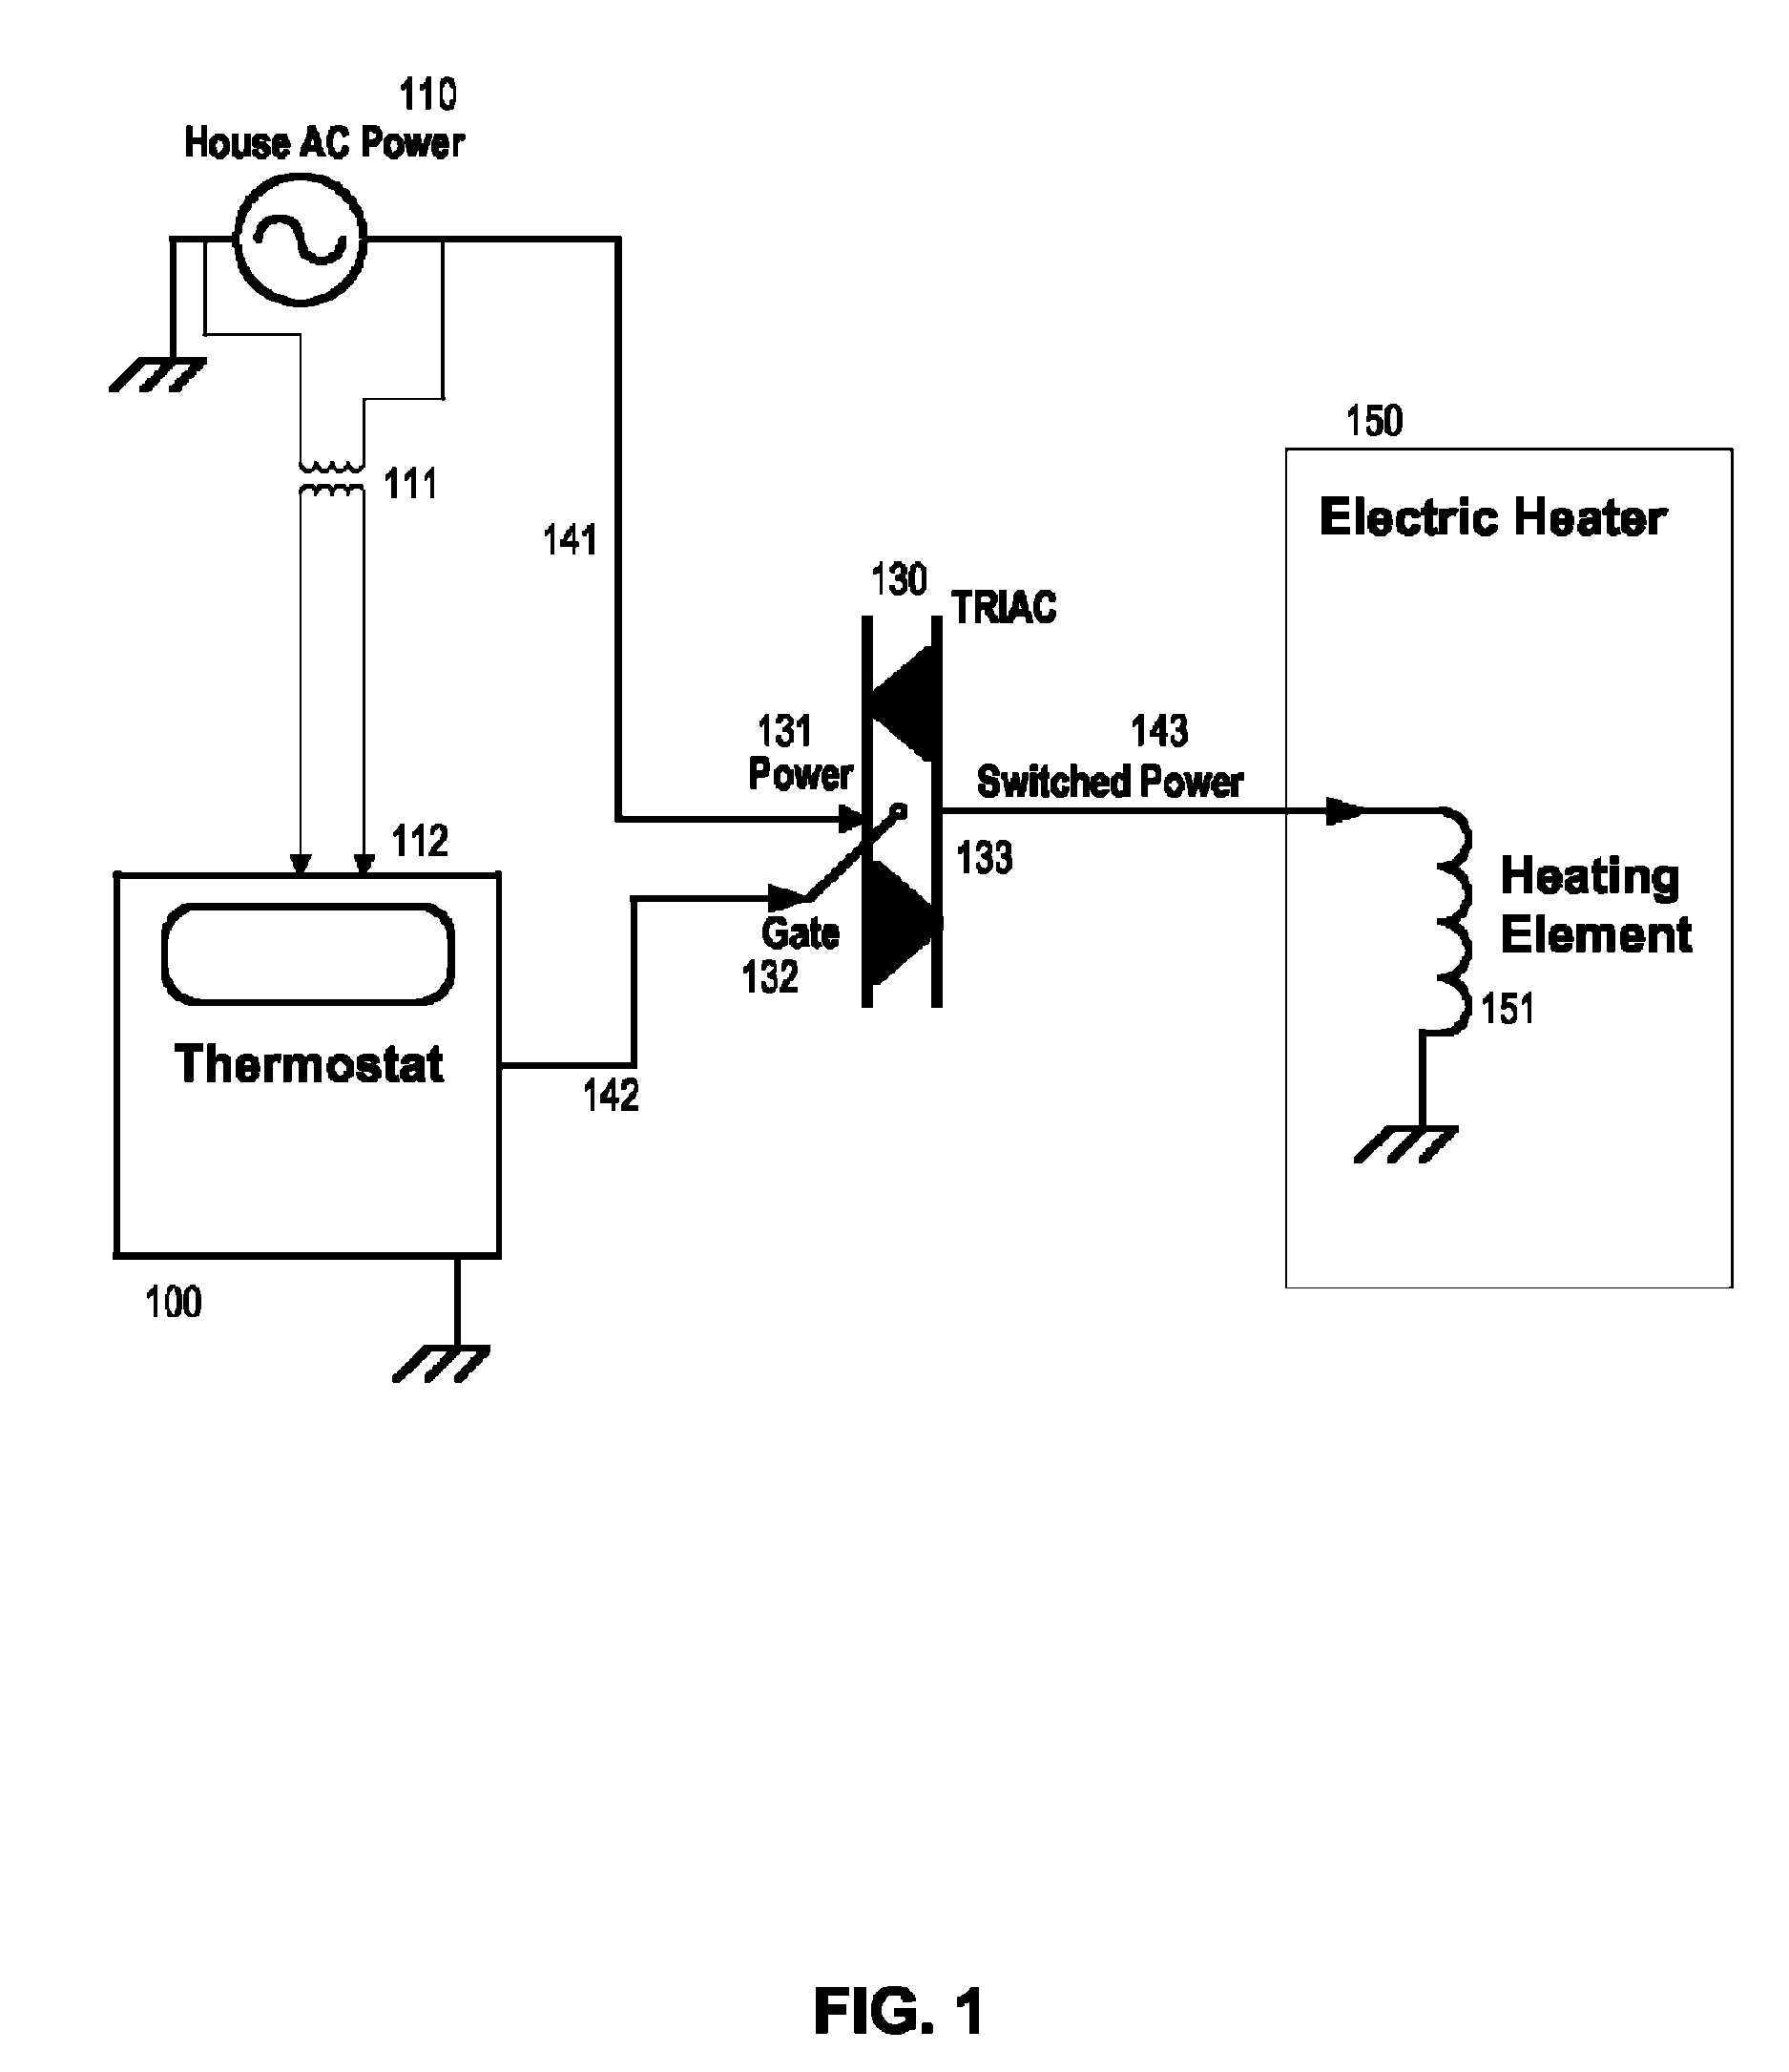 Electric baseboard heater control